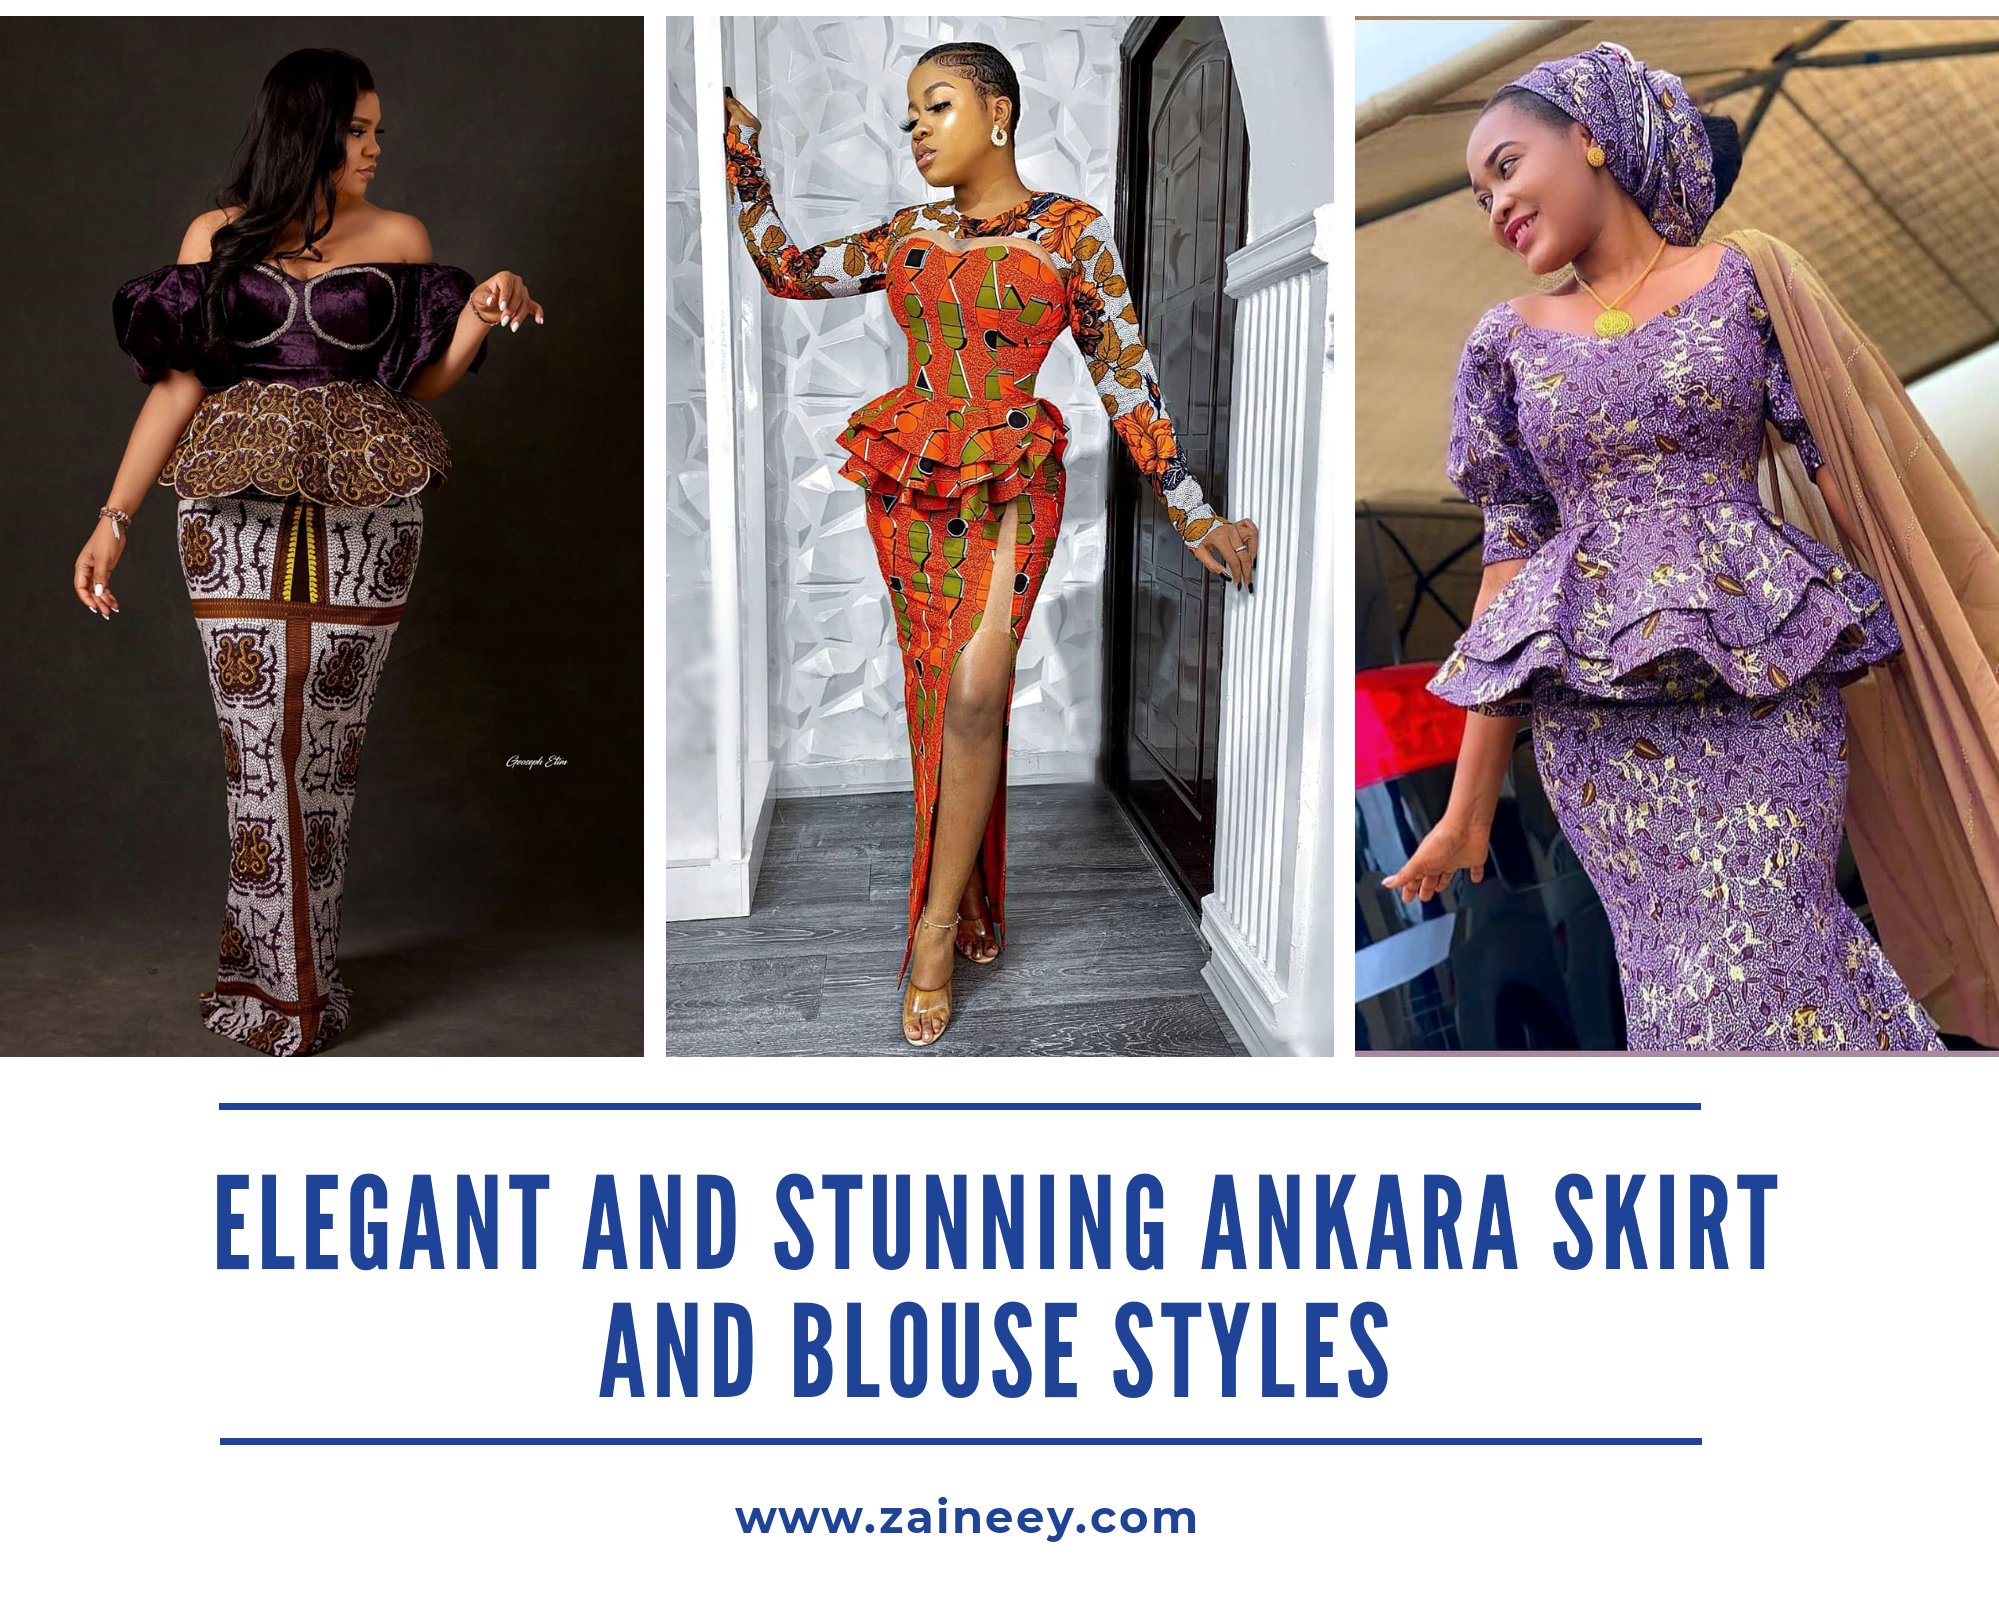 the latest ankara skirt and blouse